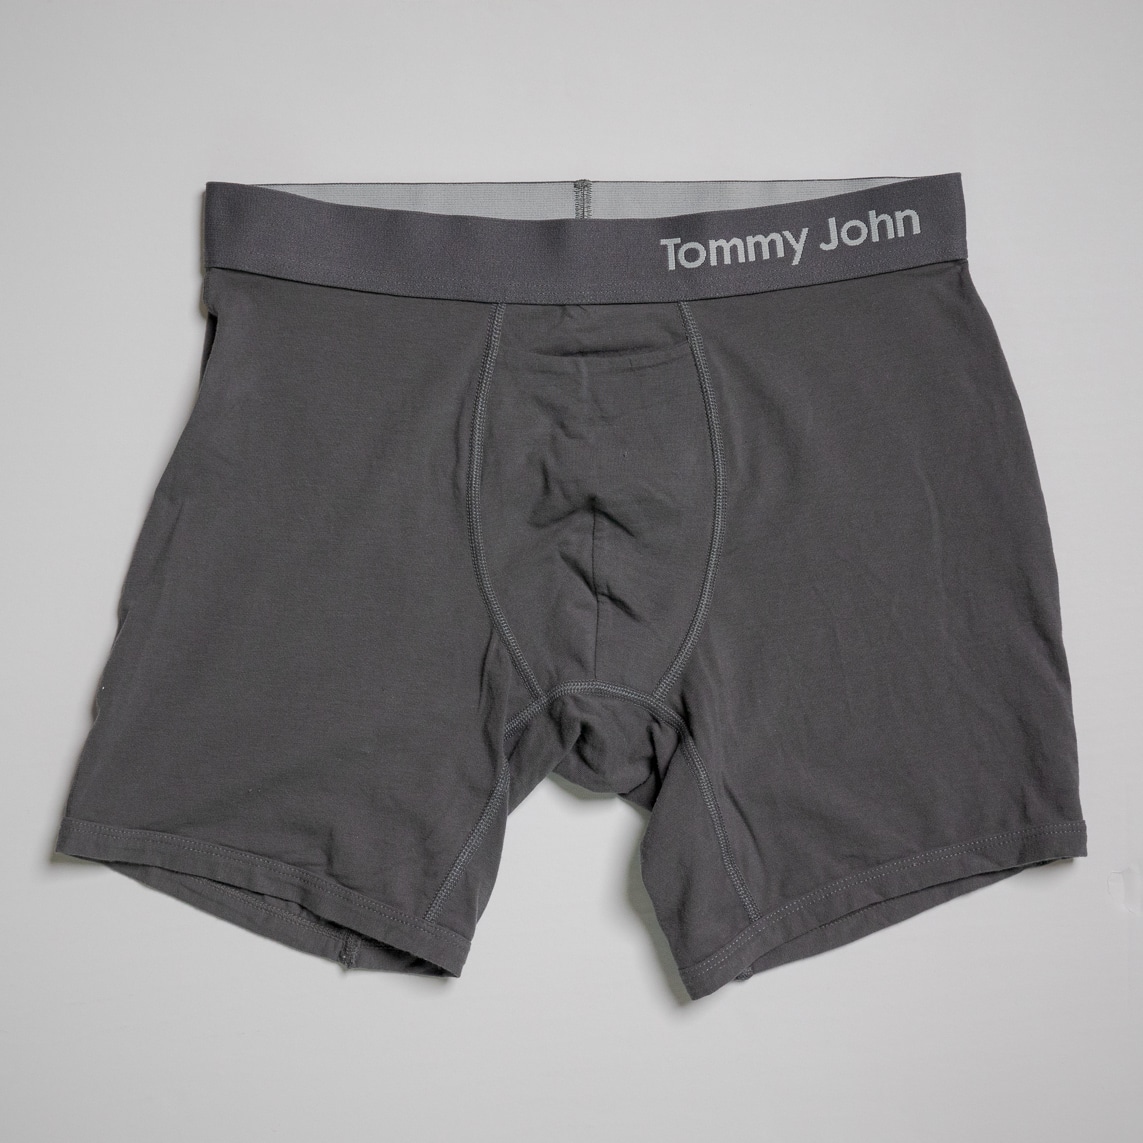 Tommy John - Underwear. Under where? #OvercomeTheUncomfortable